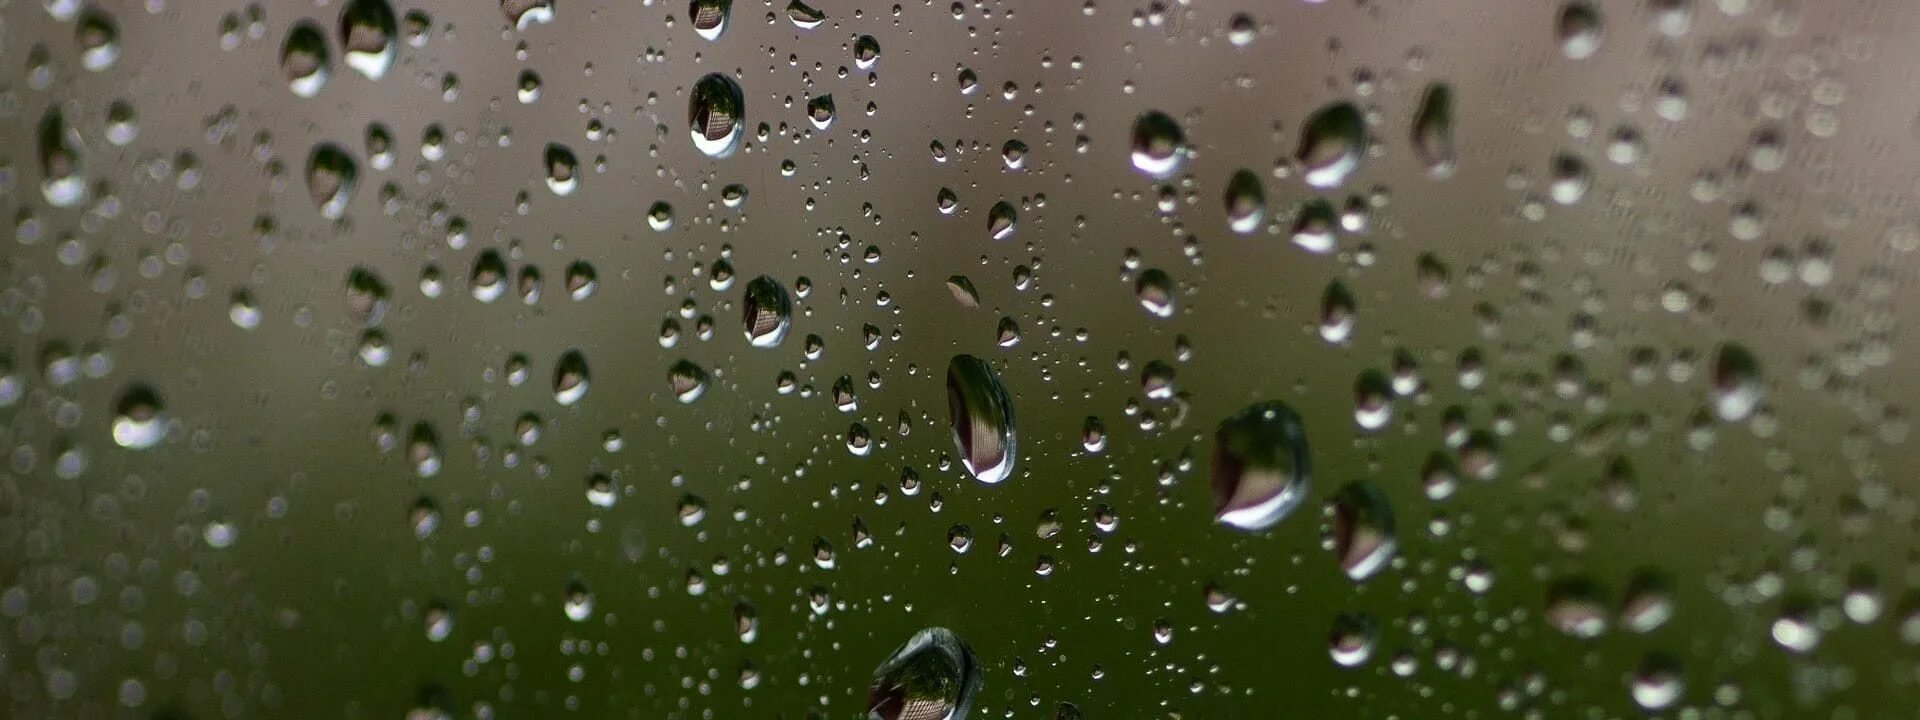 Капли дождя. Капли на окне. Капли дождя на окне. Фотообои капли дождя.